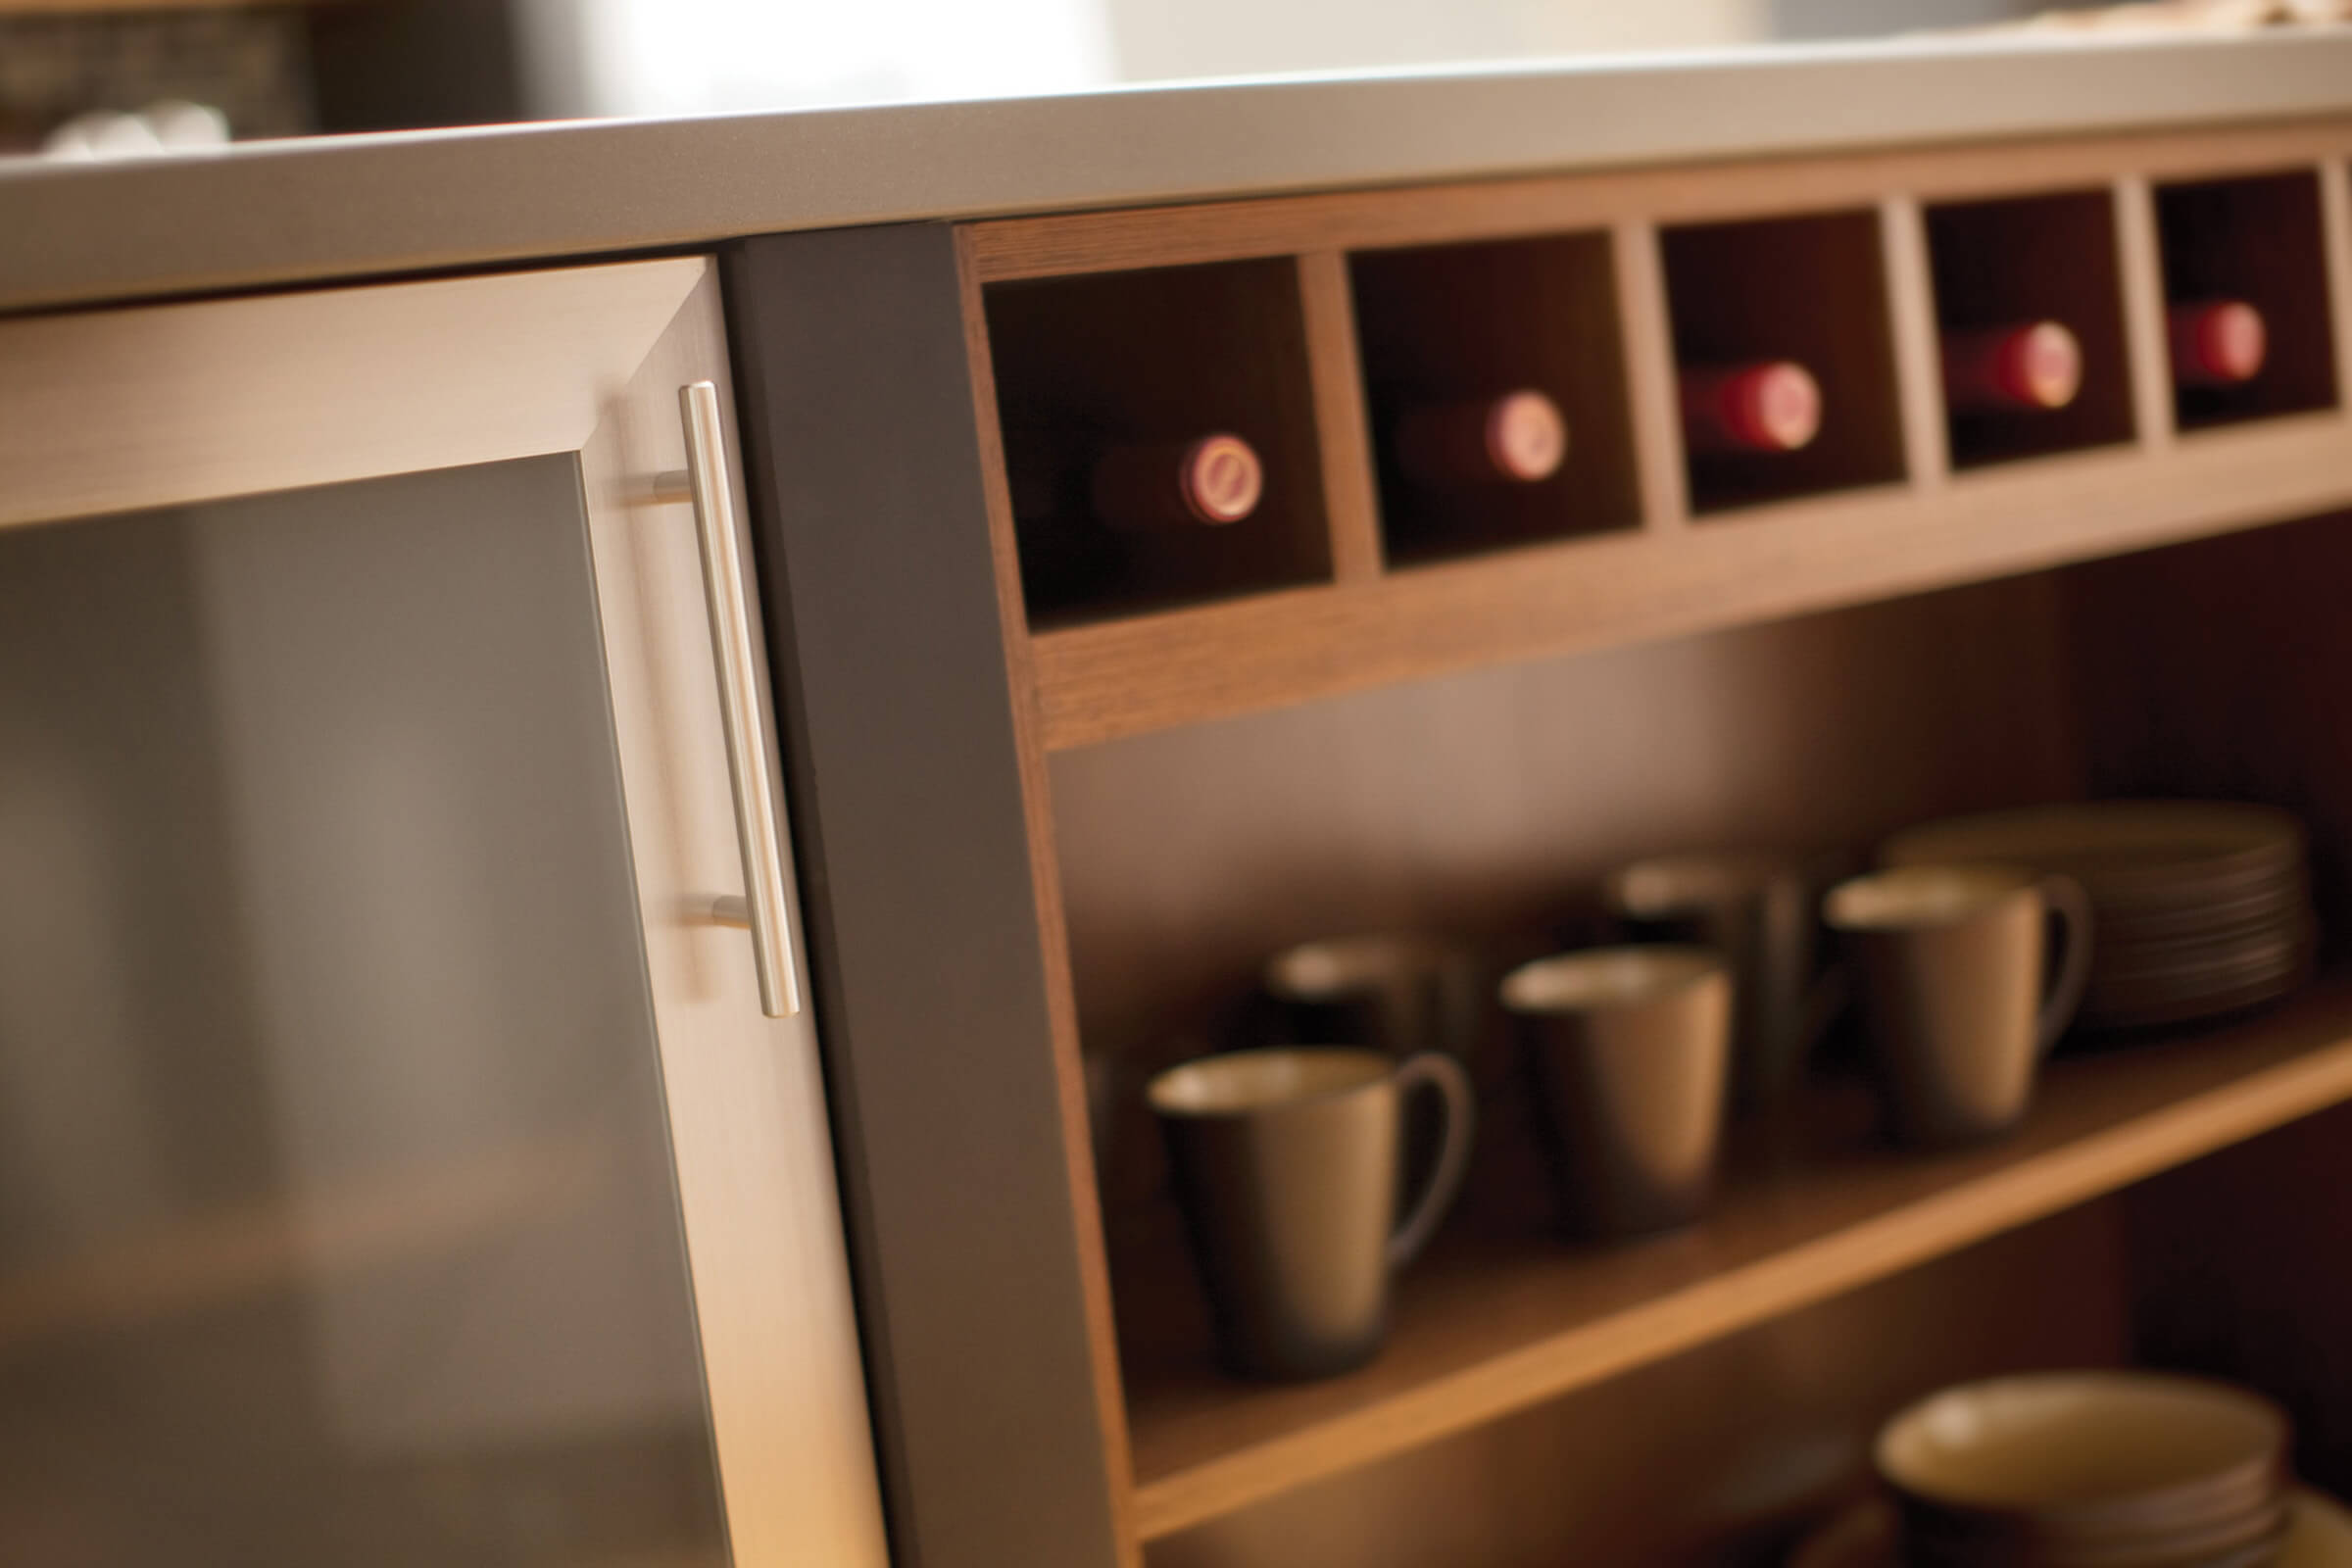 Dura Supreme vertical or horizontal wine rack cabinet.